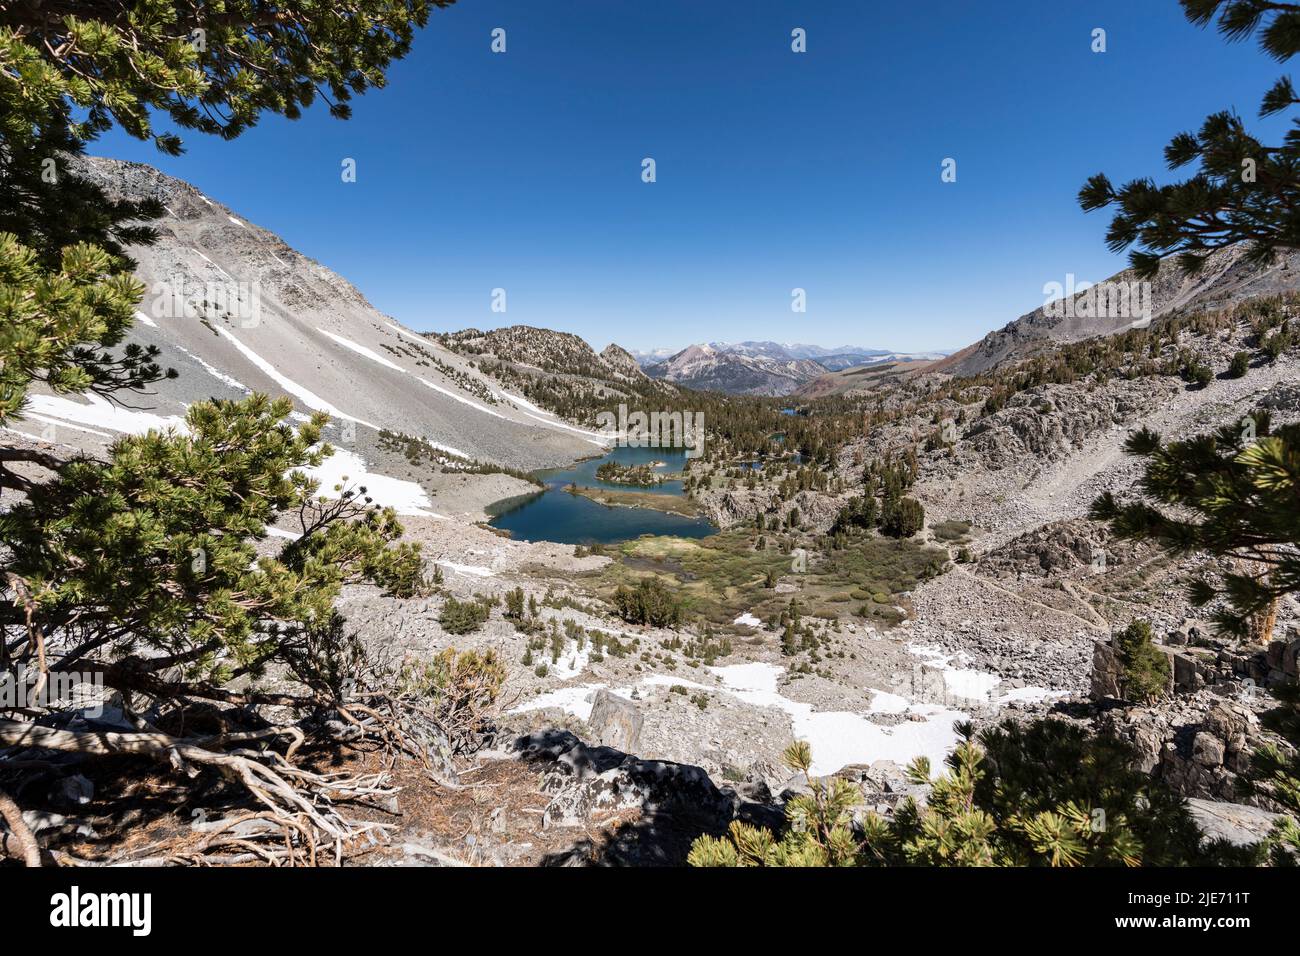 View of Skeleton Lake near Mammoth Lakes in the Sierra Nevada Mountains of California. Stock Photo